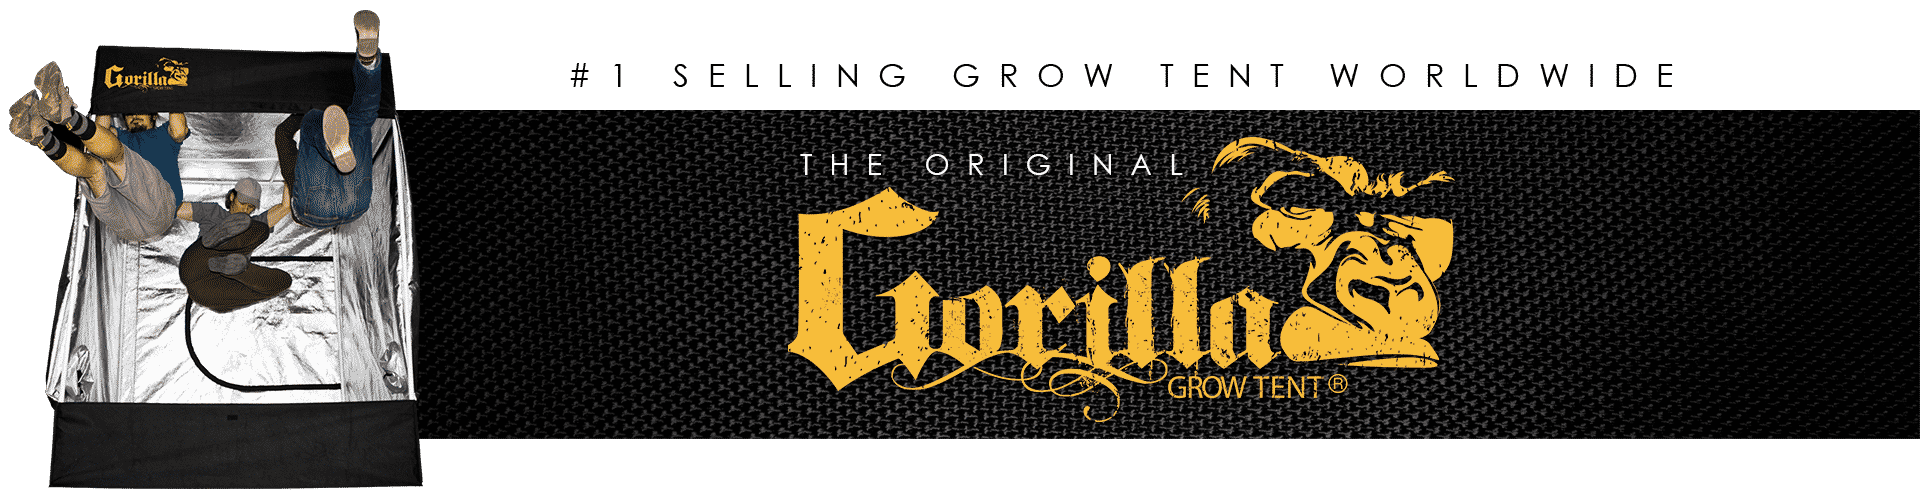 Gorilla Grow Tent